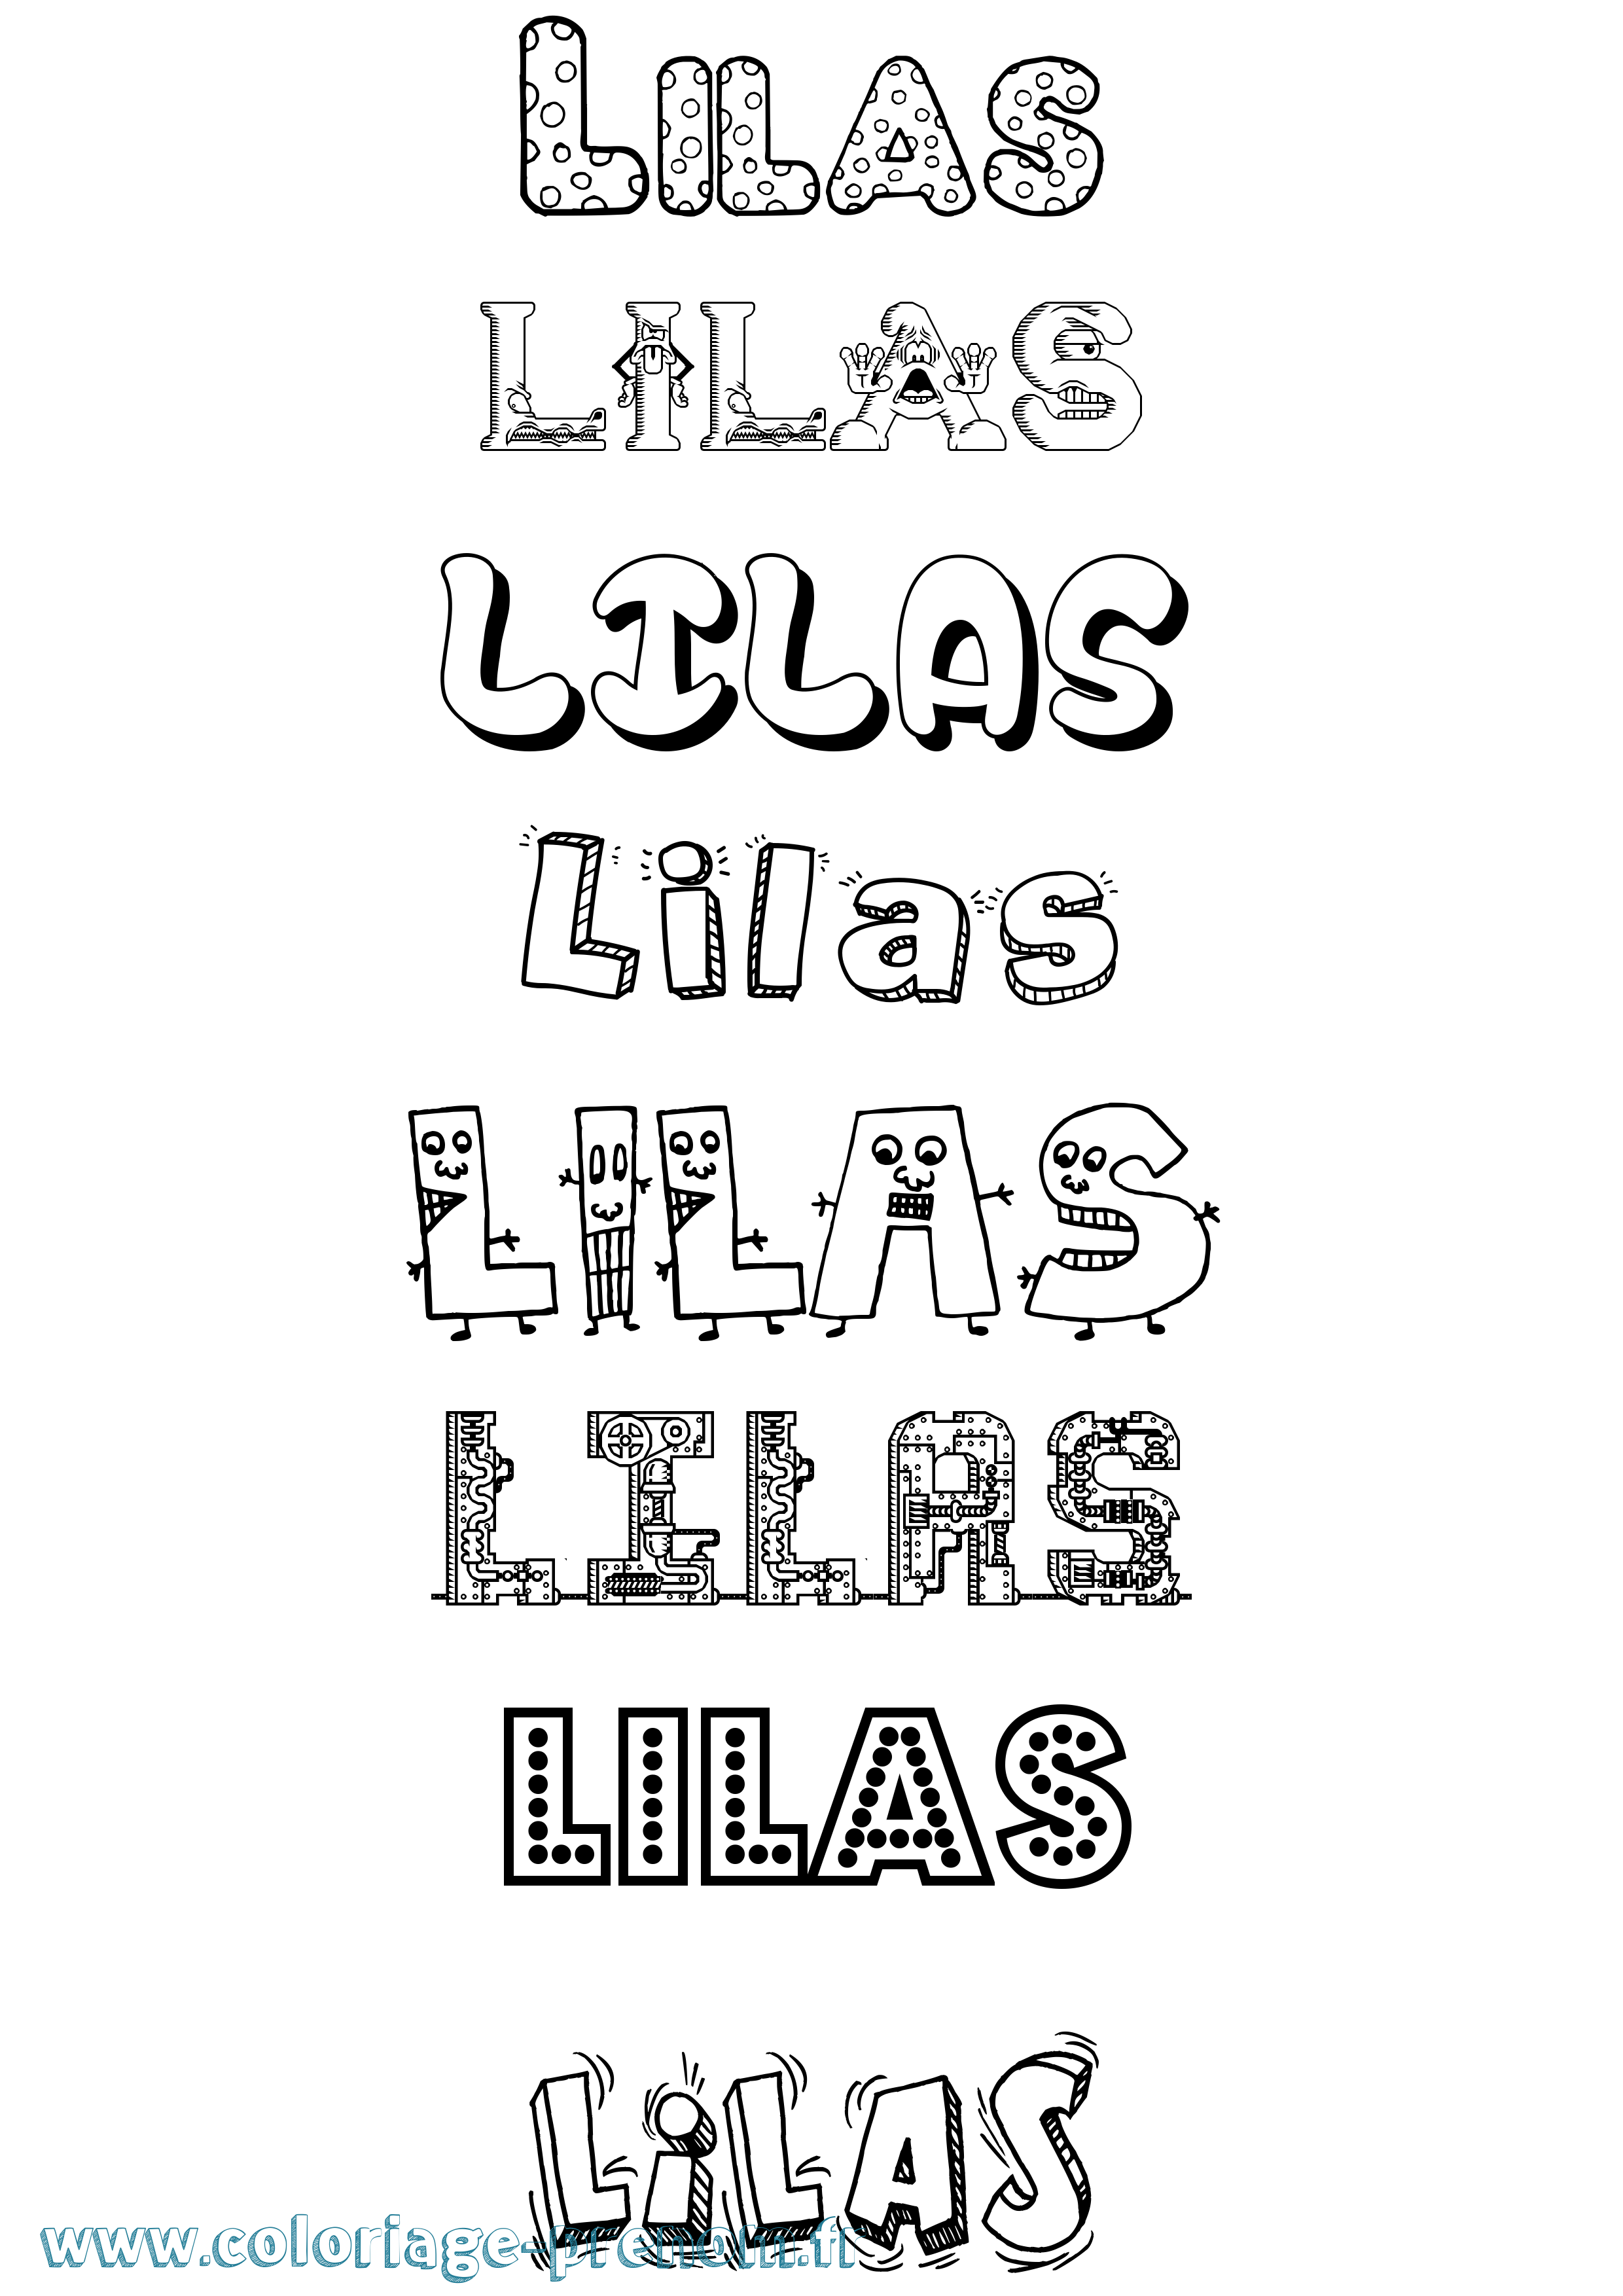 Coloriage prénom Lilas